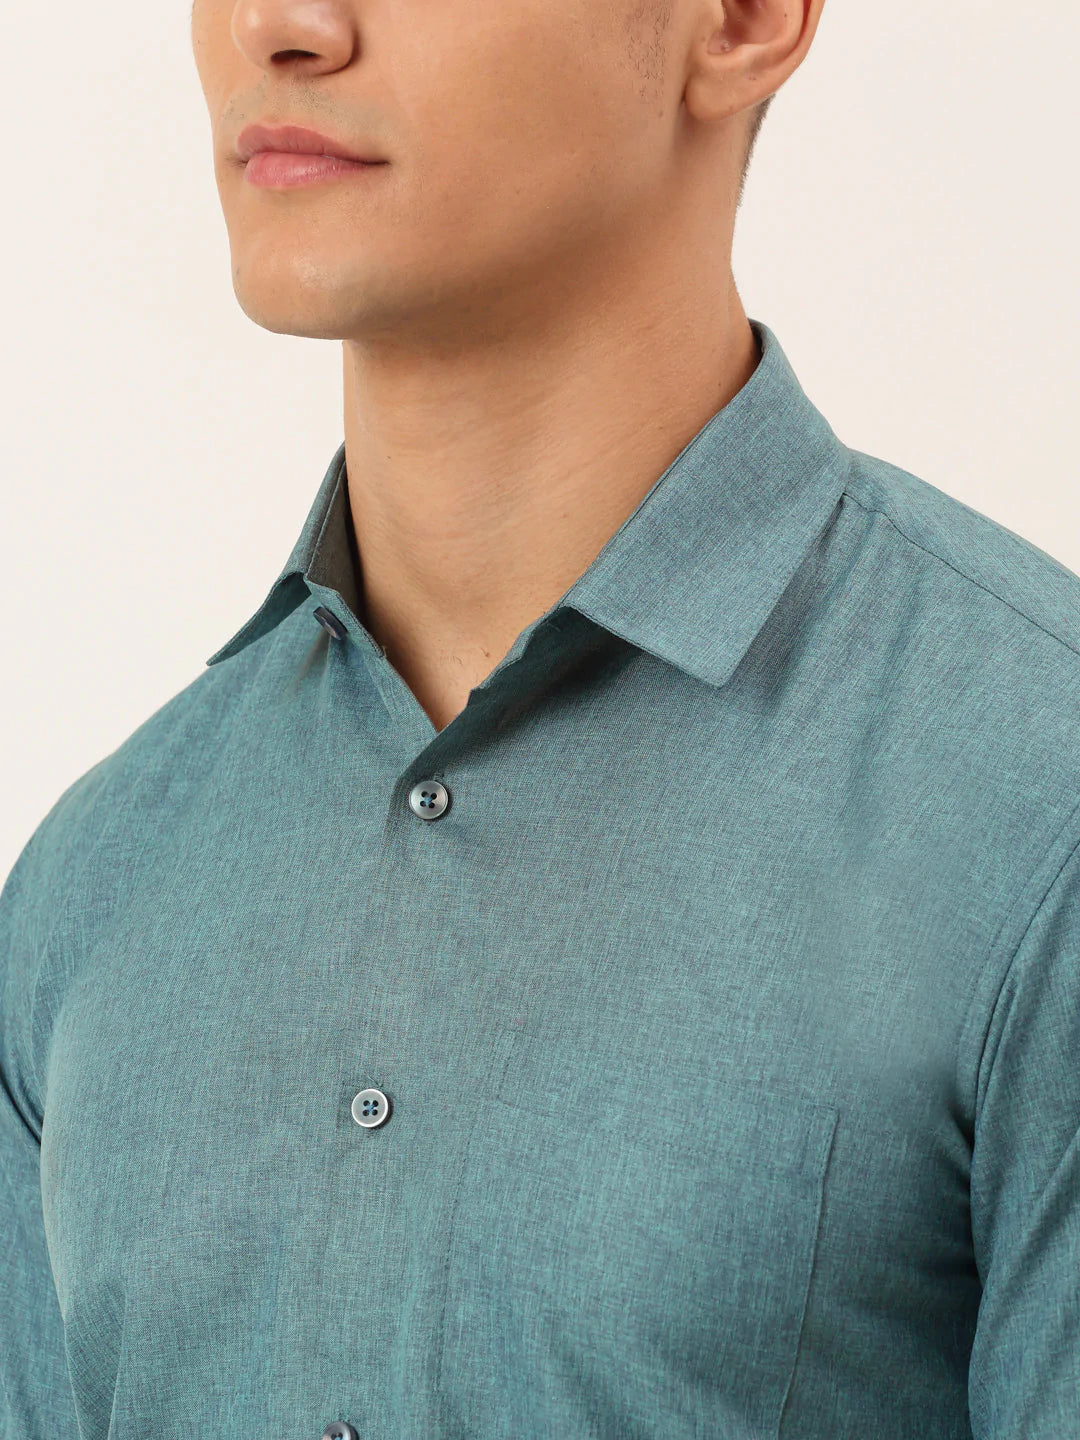 Jainish Men's Cotton Solid Half Sleeve Formal Shirts ( SF 811Grey )